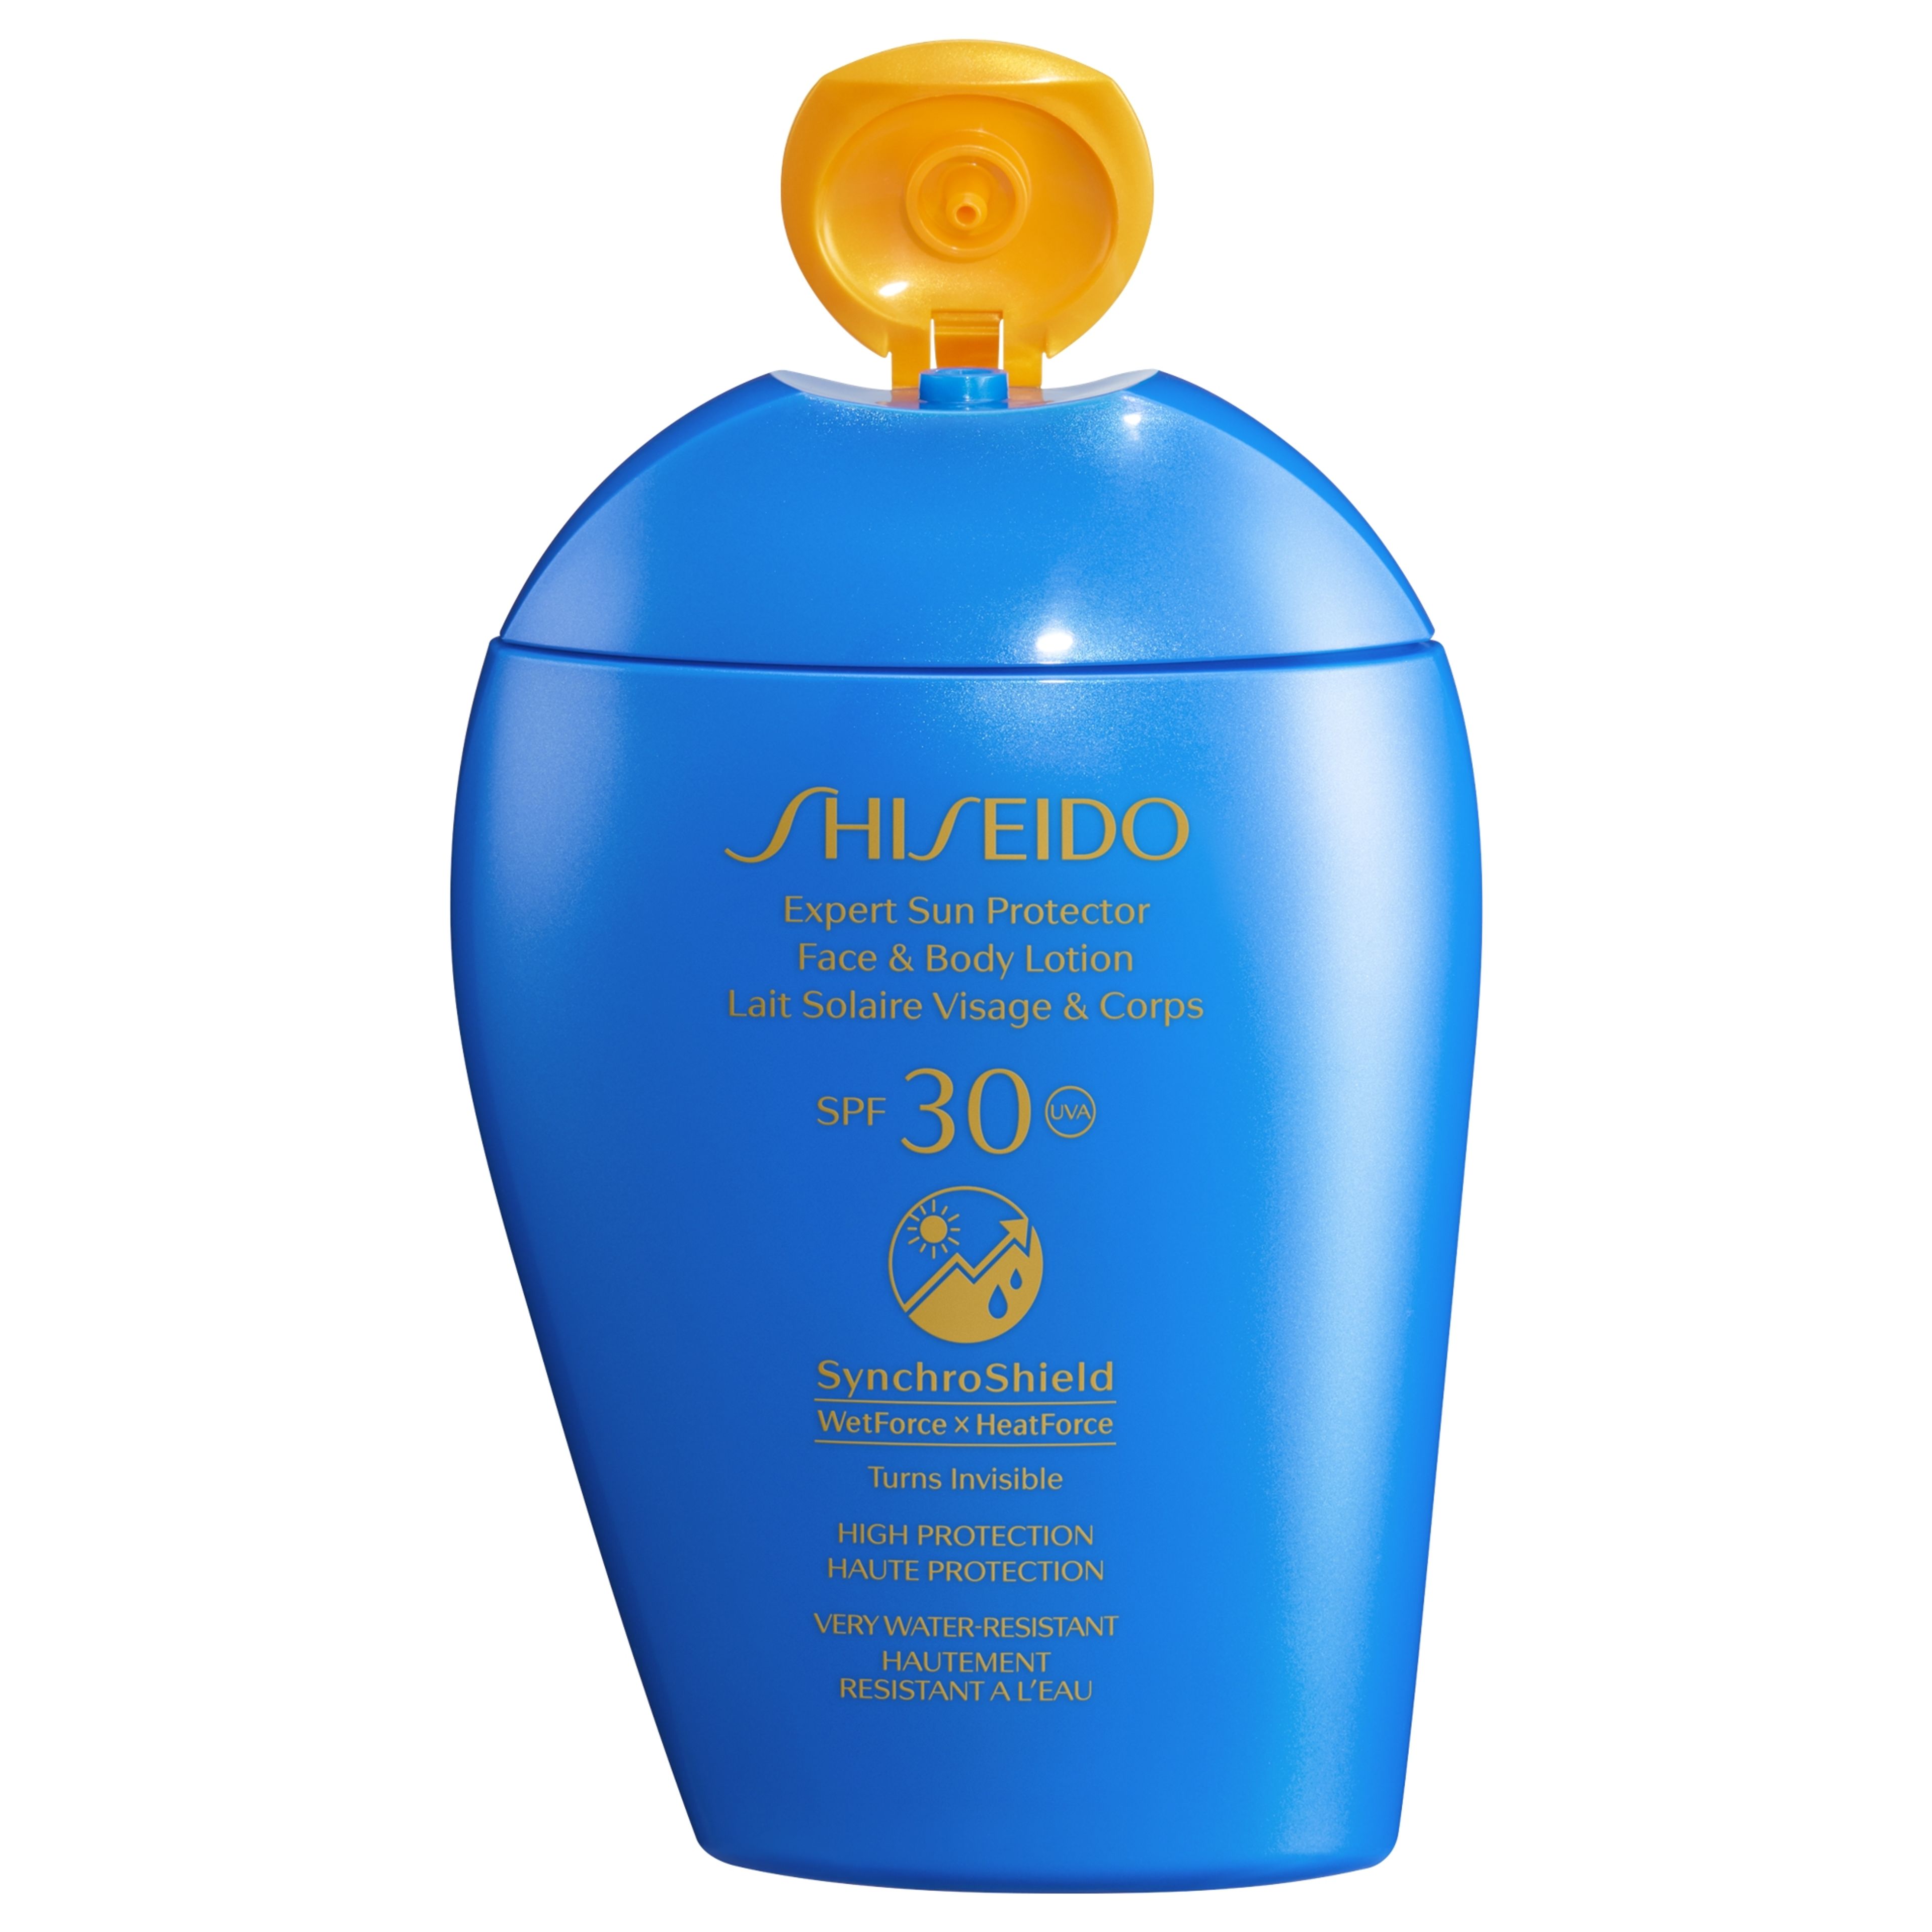 Shiseido Expert Sun Protector
face And Body Lotion 
spf30 2